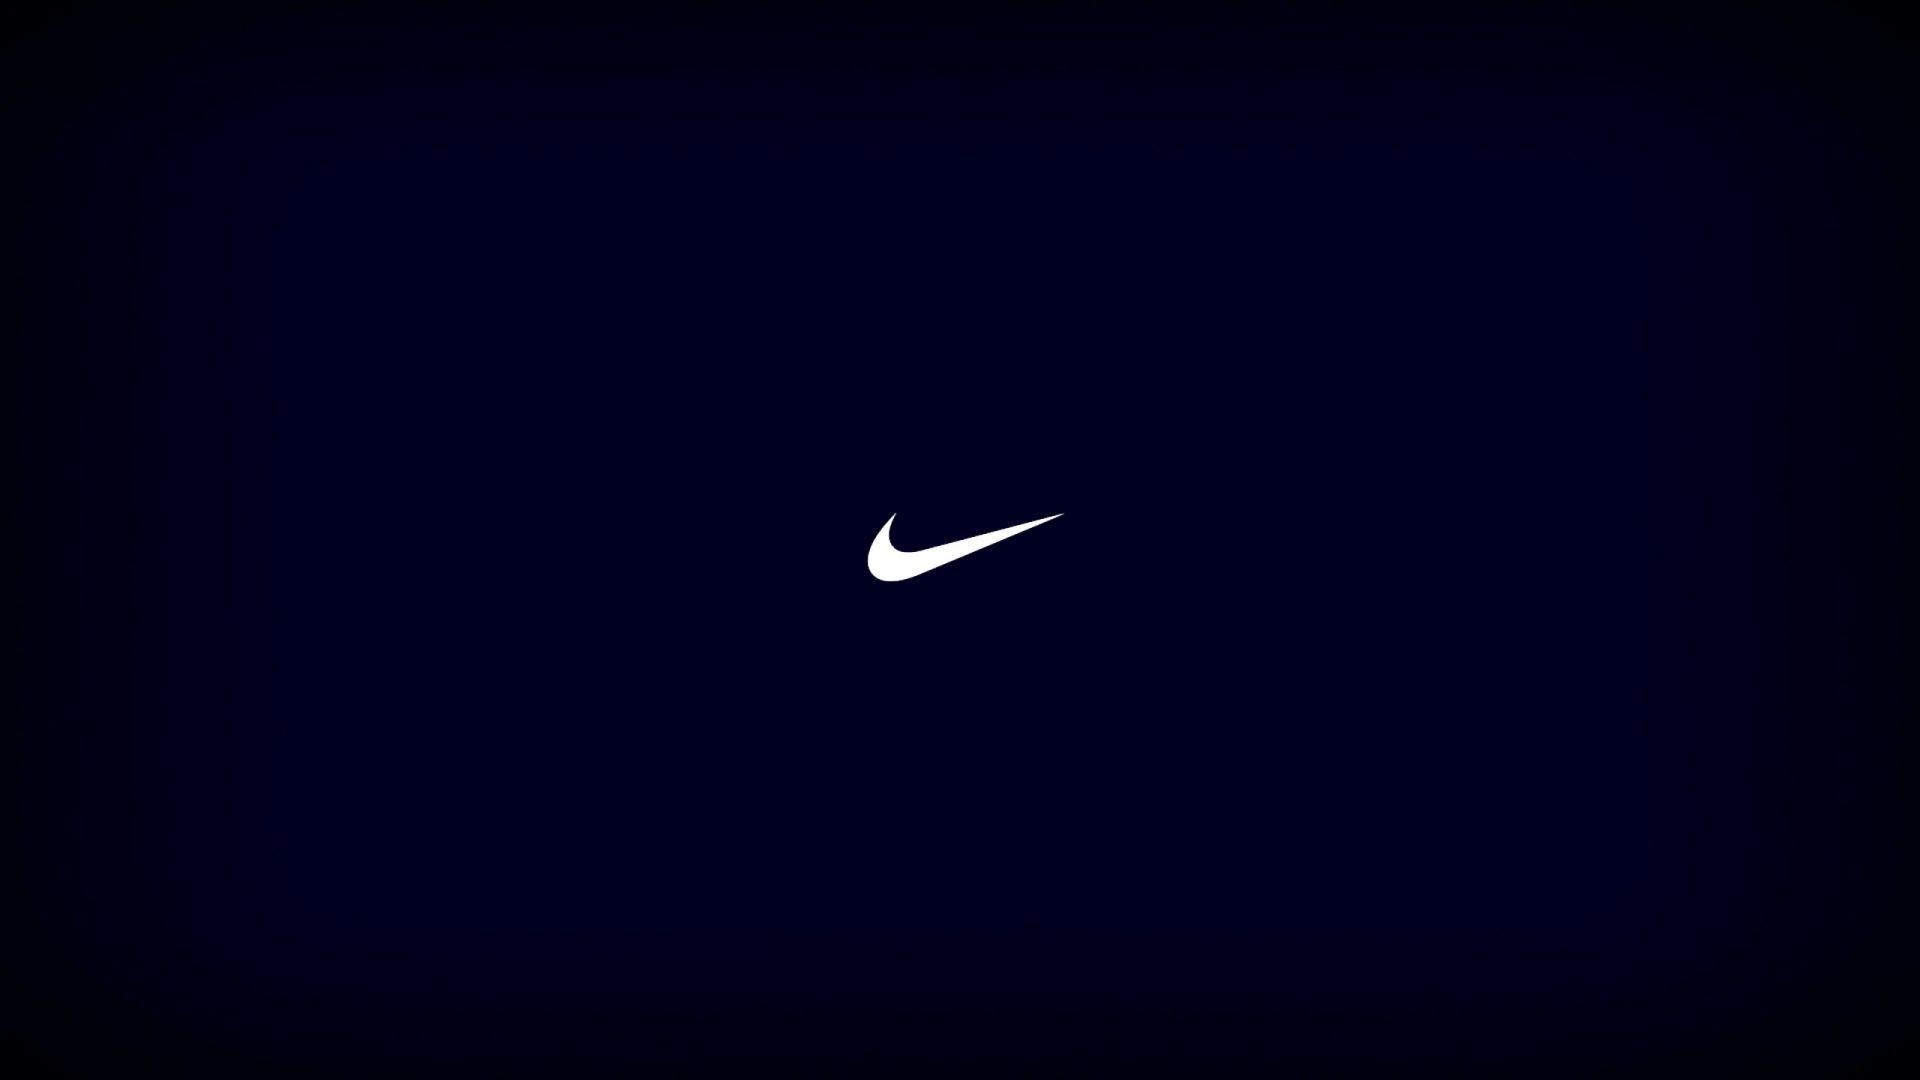 Nike Logo On The Blue Background Wallpaper Des Wallpaper